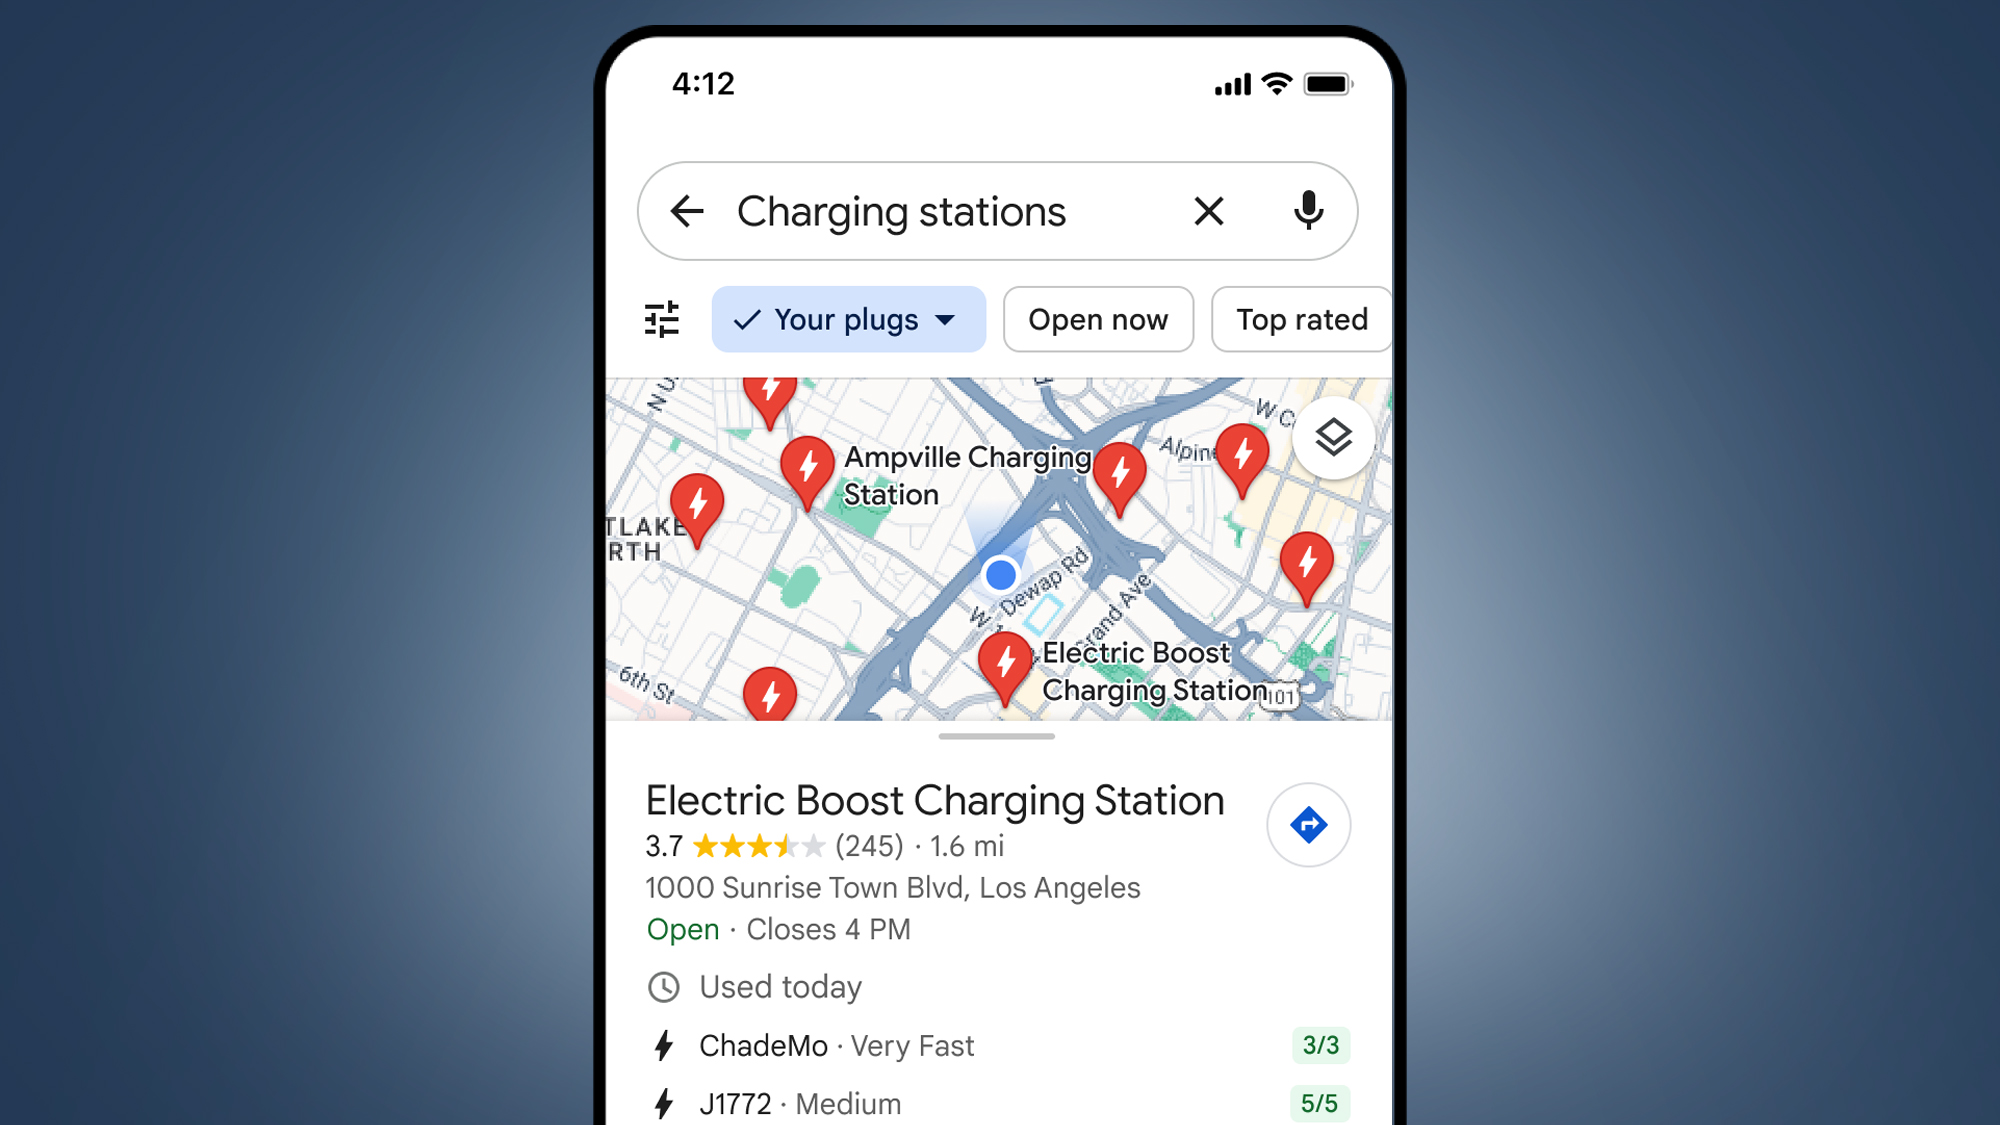 Phone on blue background showing Google Maps EV charging station information